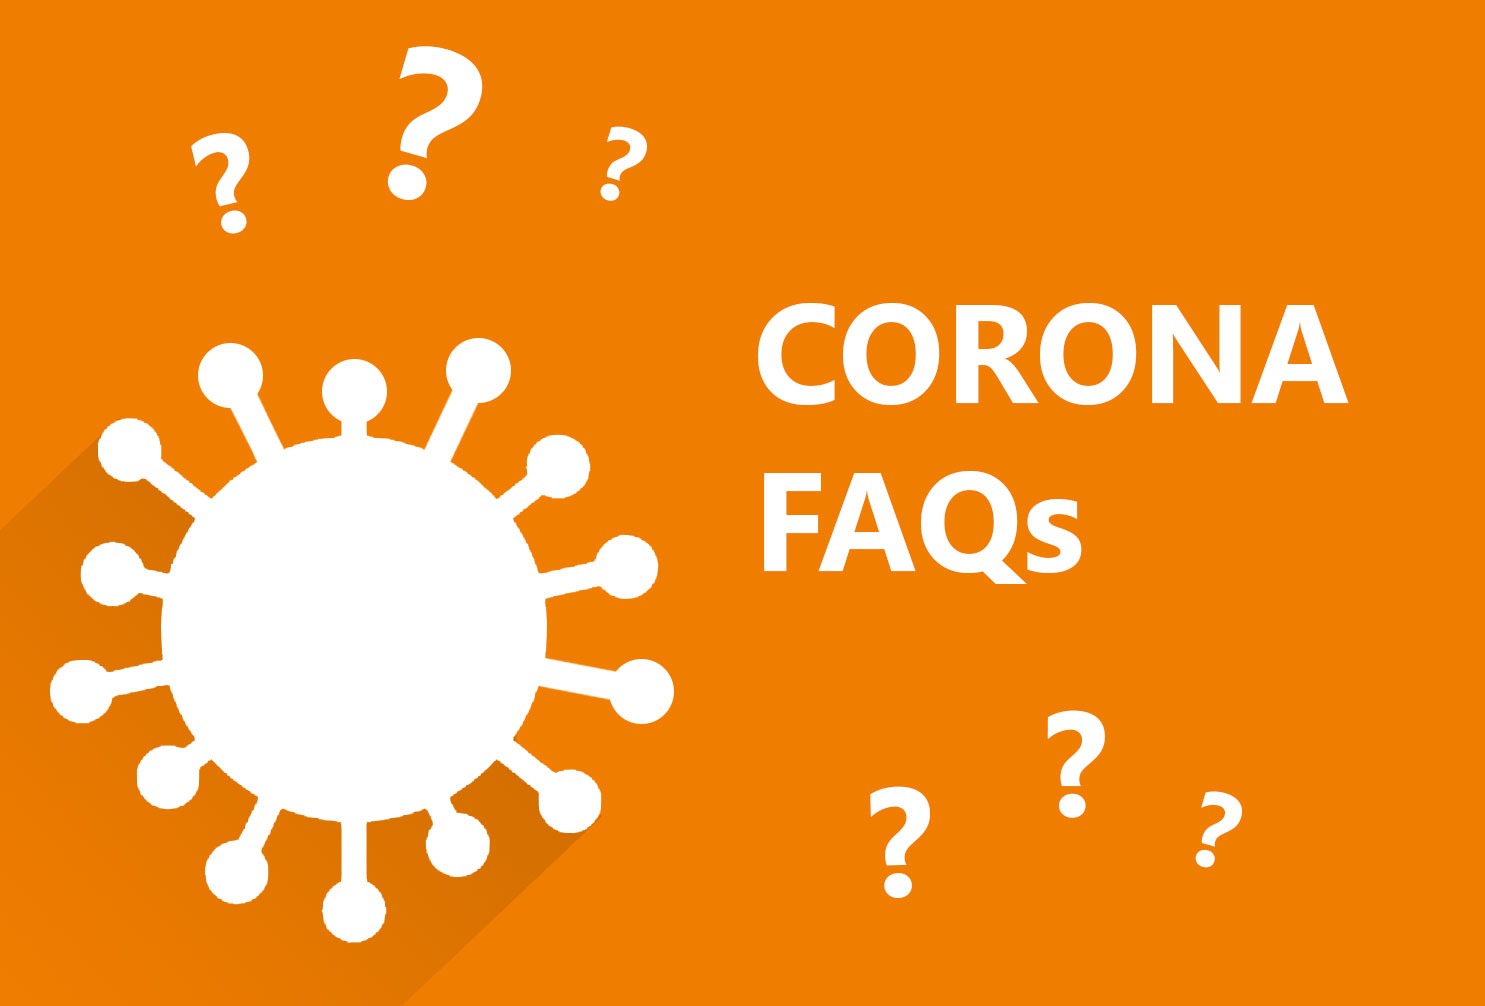 Corona FAQs